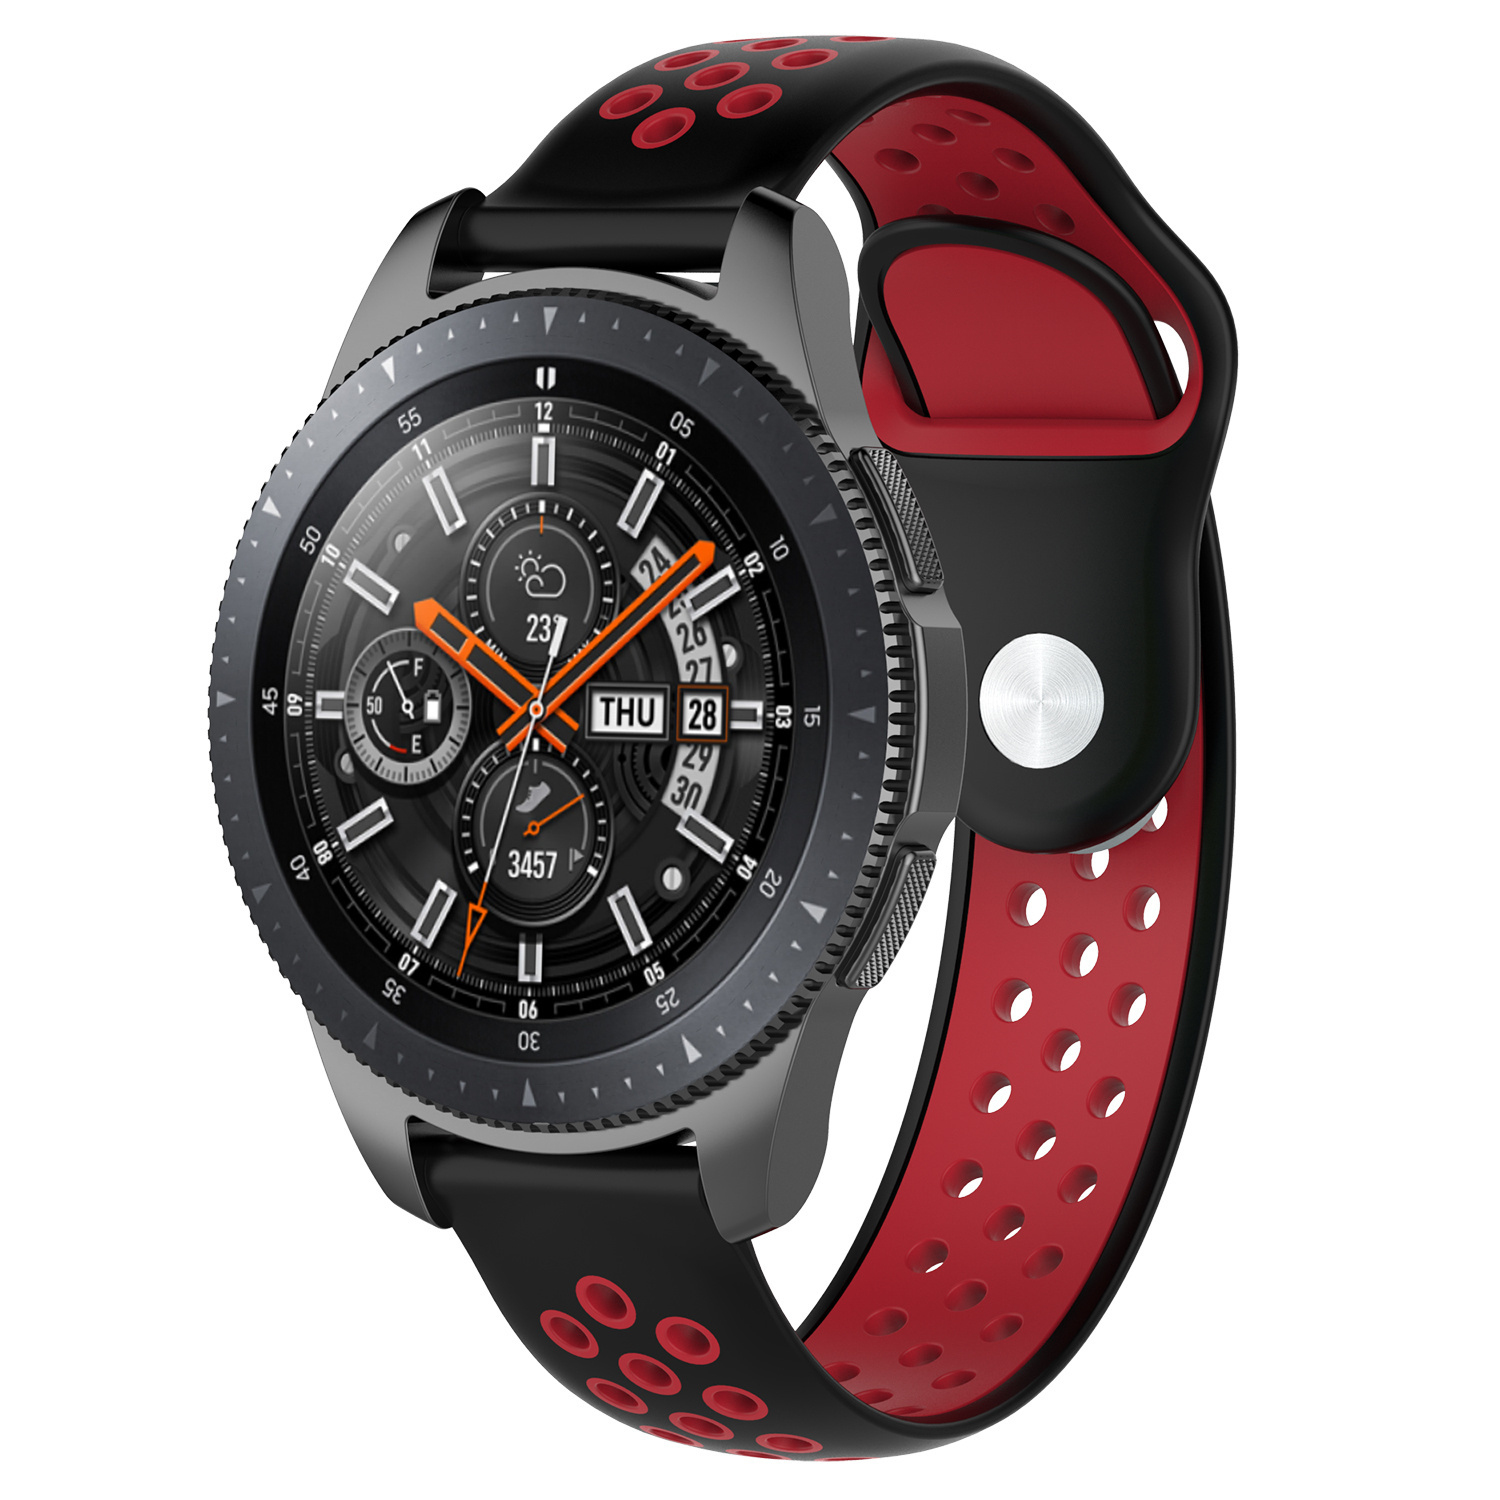 Samsung Galaxy Watch dupla sport szíj - fekete piros